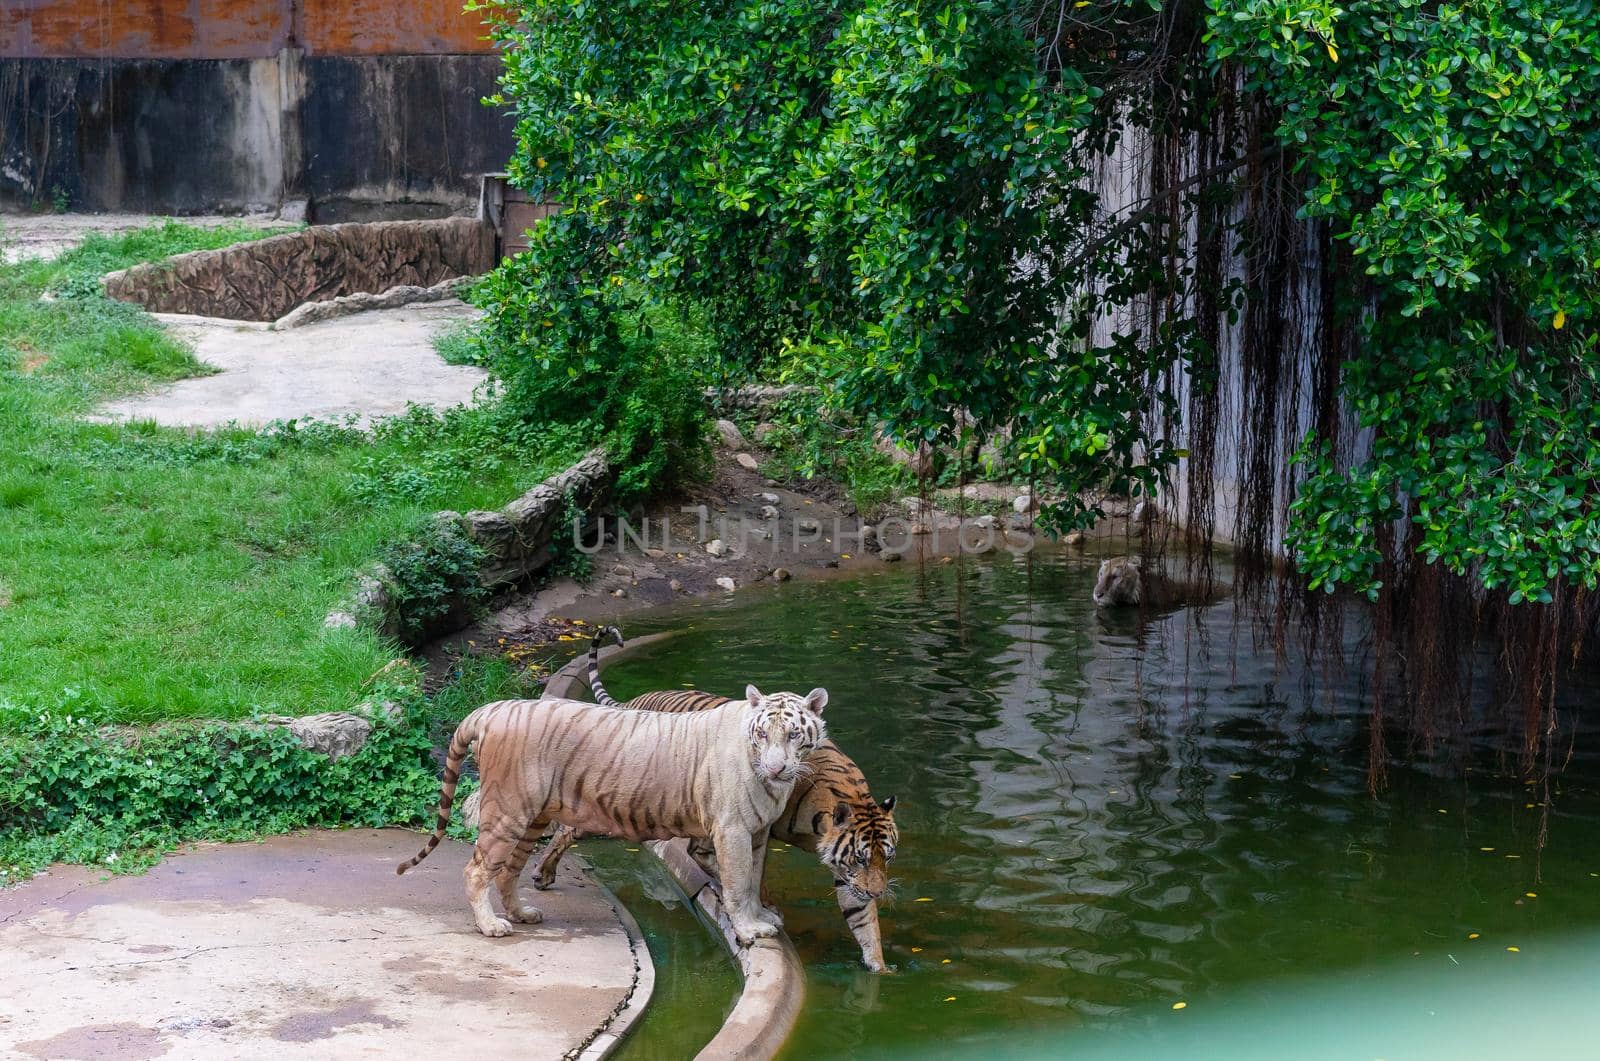 Tiger walking in the zoo. Dangerous animal by domonite